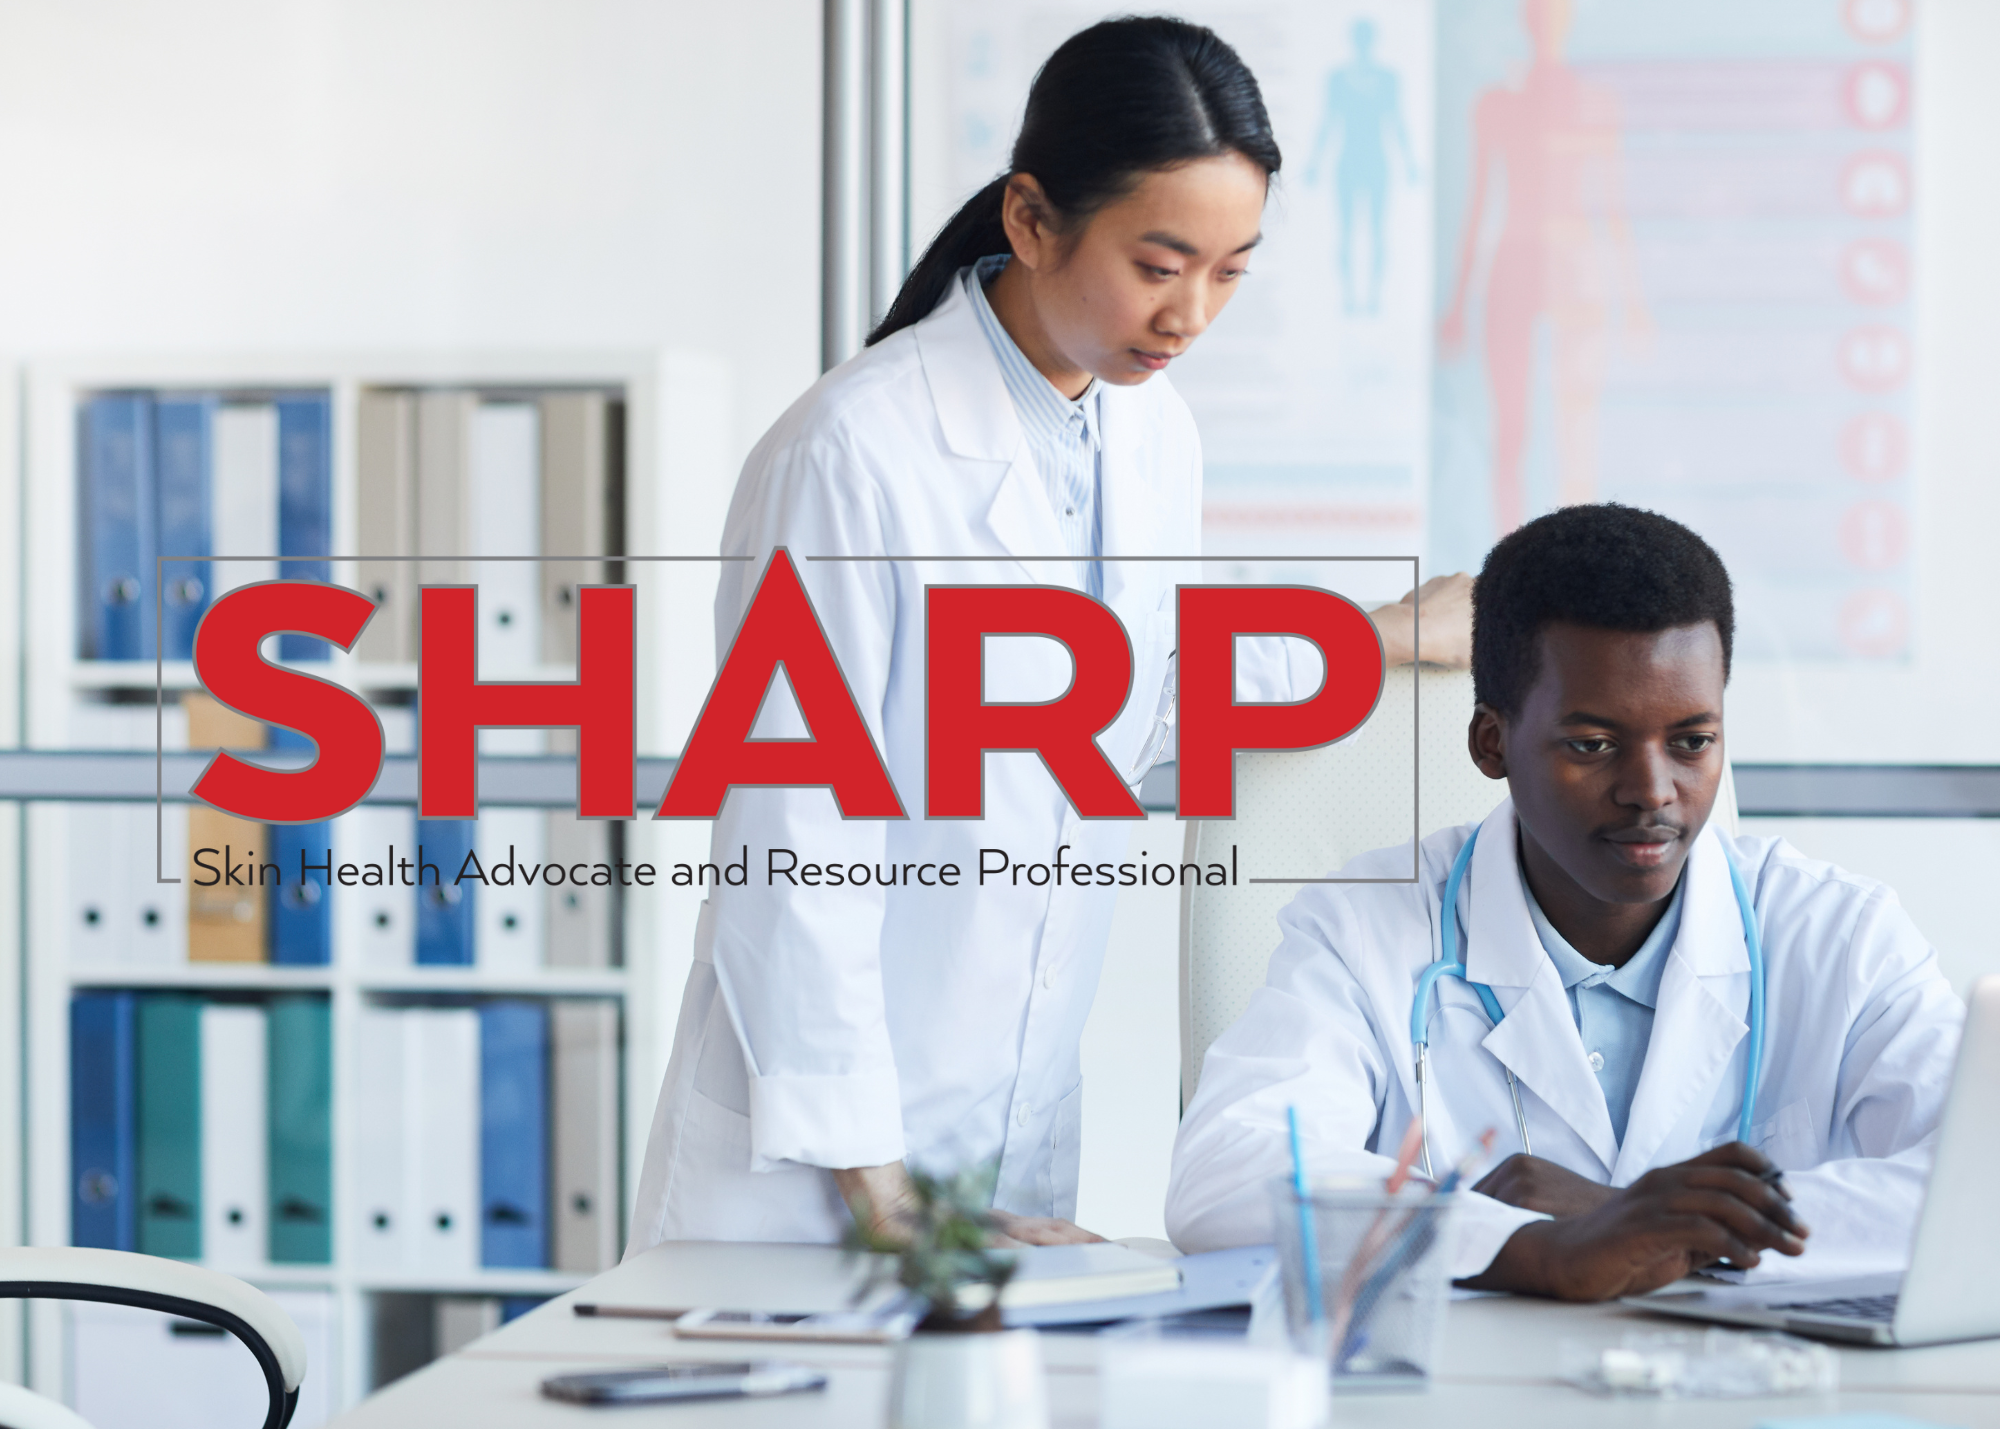 SHARP Program